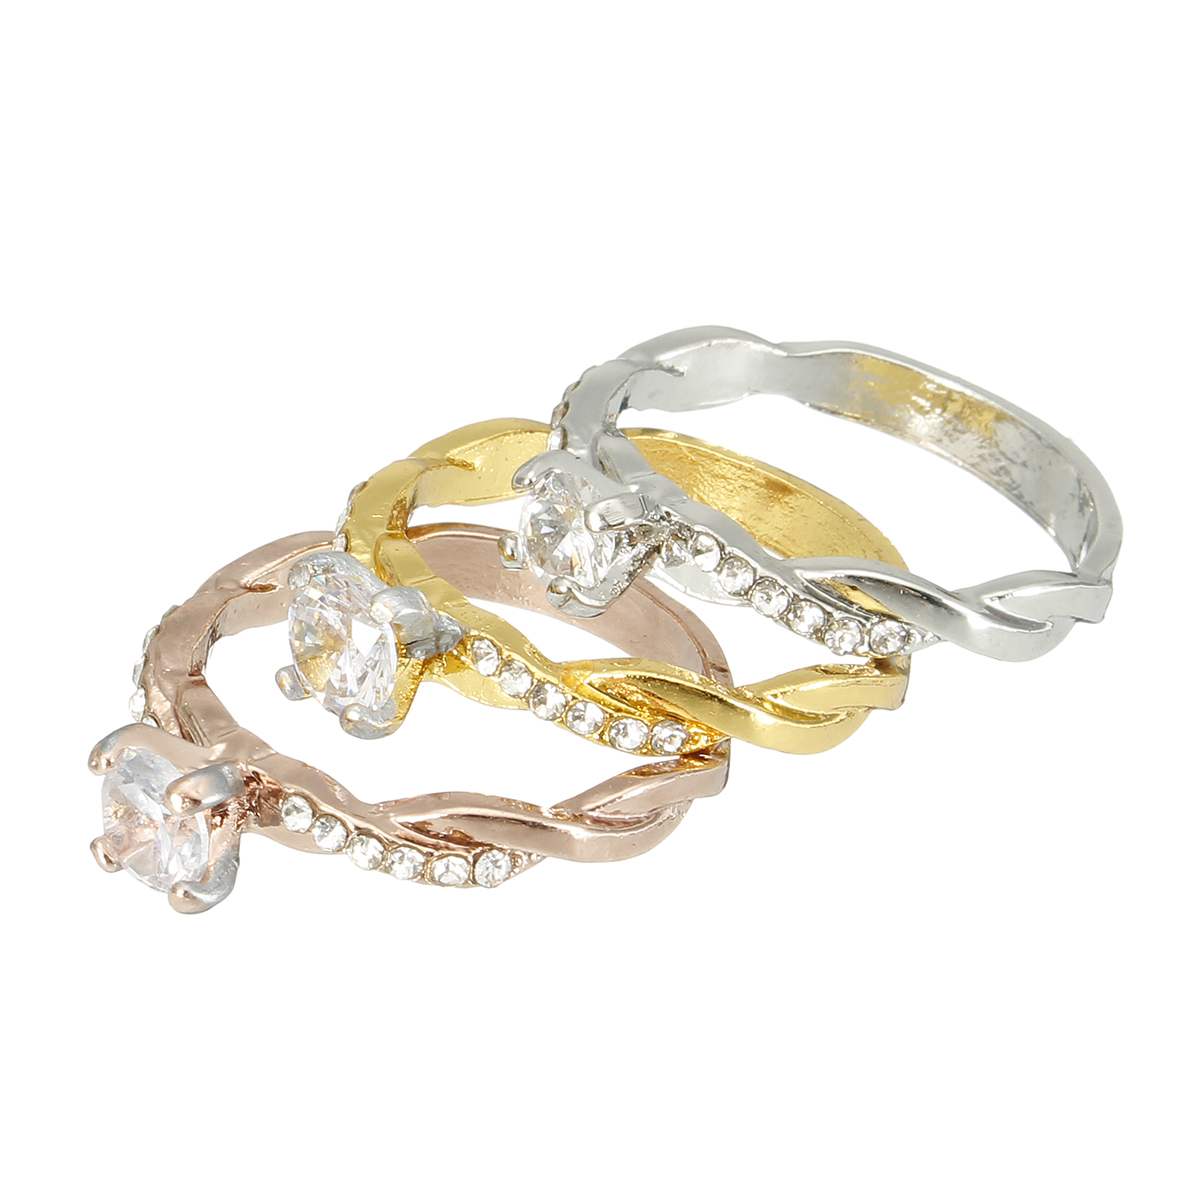 Women's ring, zircon sparkling diamond ring with beautiful romantic jewelry gift,Zirconia Decorative Flower Ring - image 2 of 4